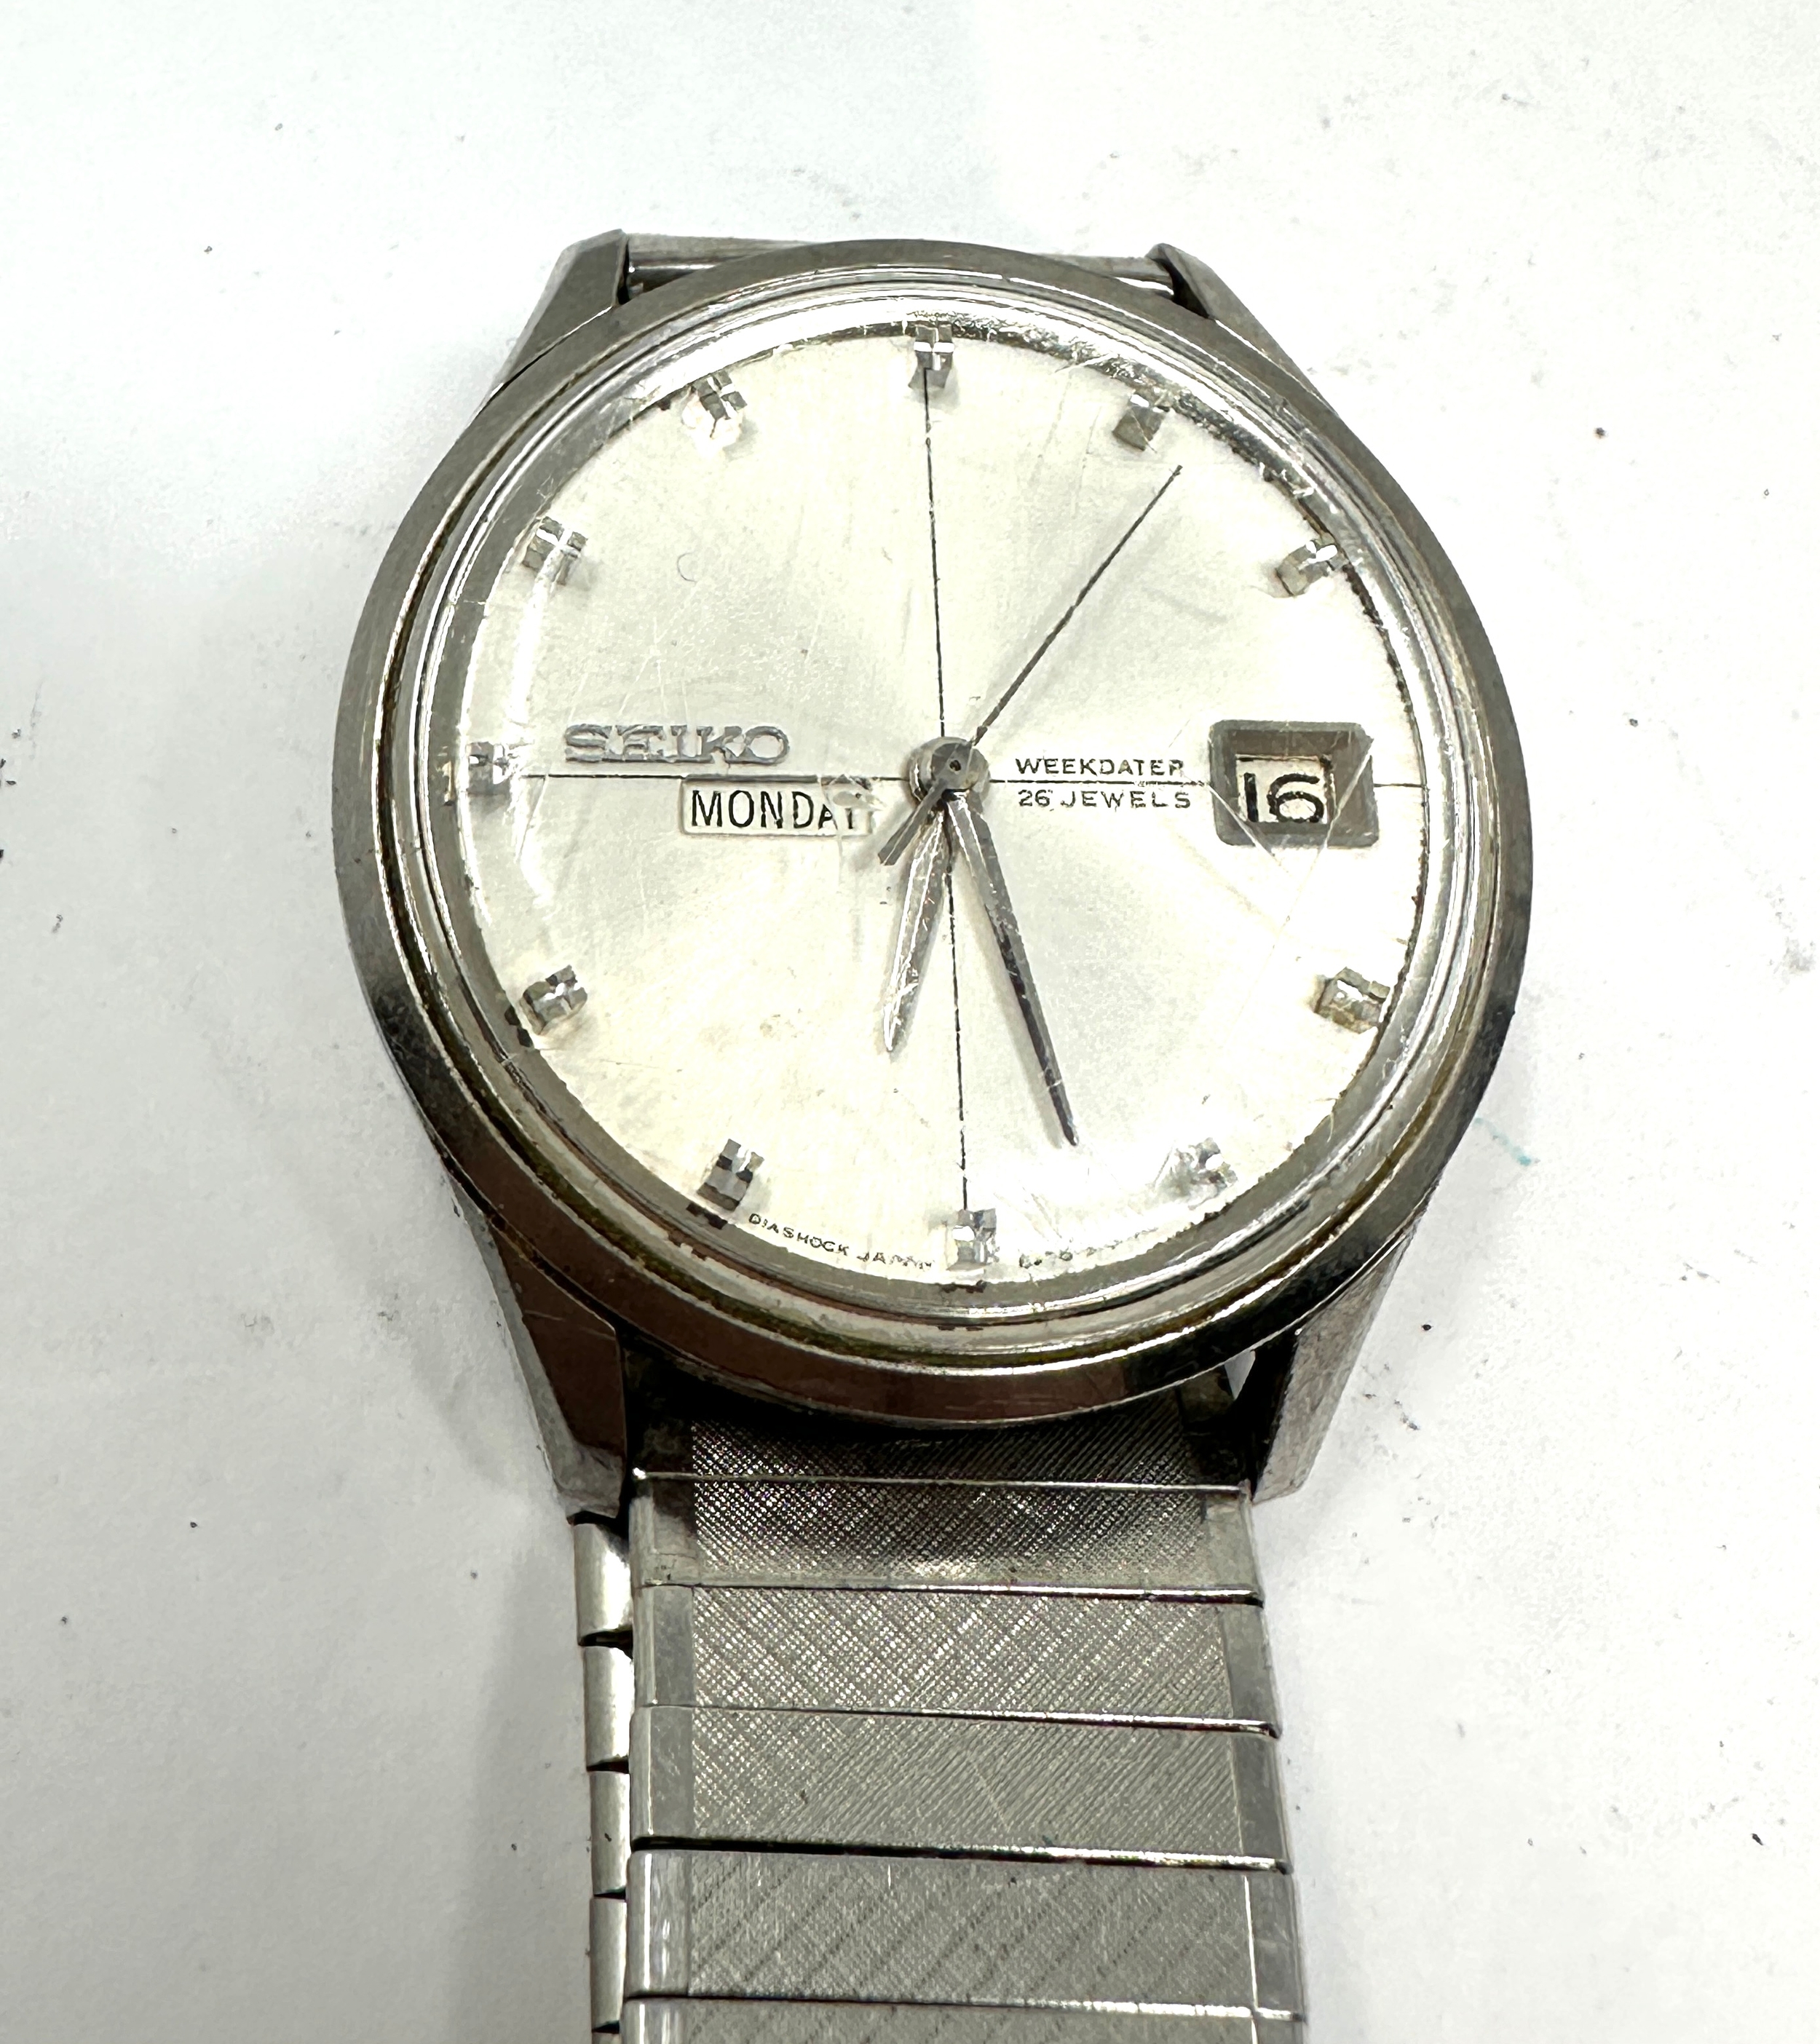 Vintage Seiko Weekdater 26 jewel gents wristwatch the watch is ticking - Image 2 of 6